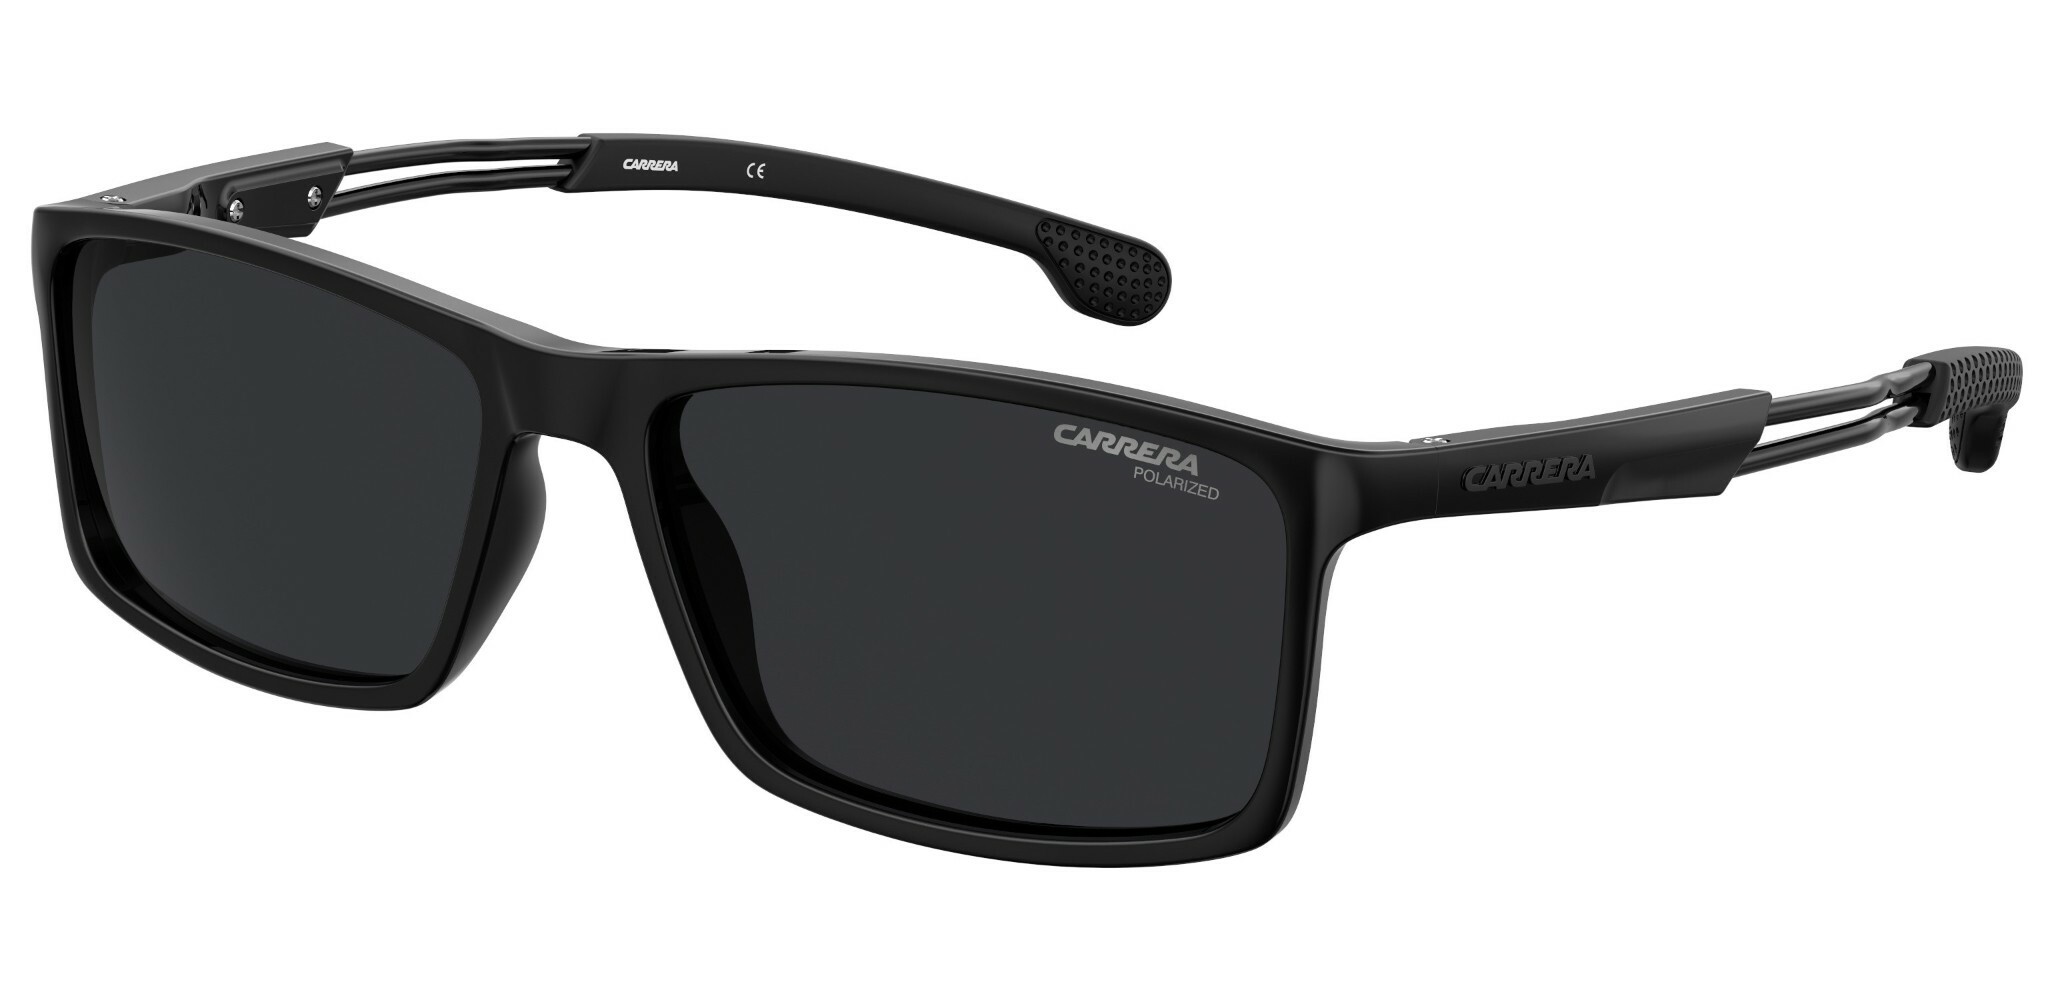 Carrera Grey Polarized Rectangular Mens Sunglasses 4016/s 0807 M9 55